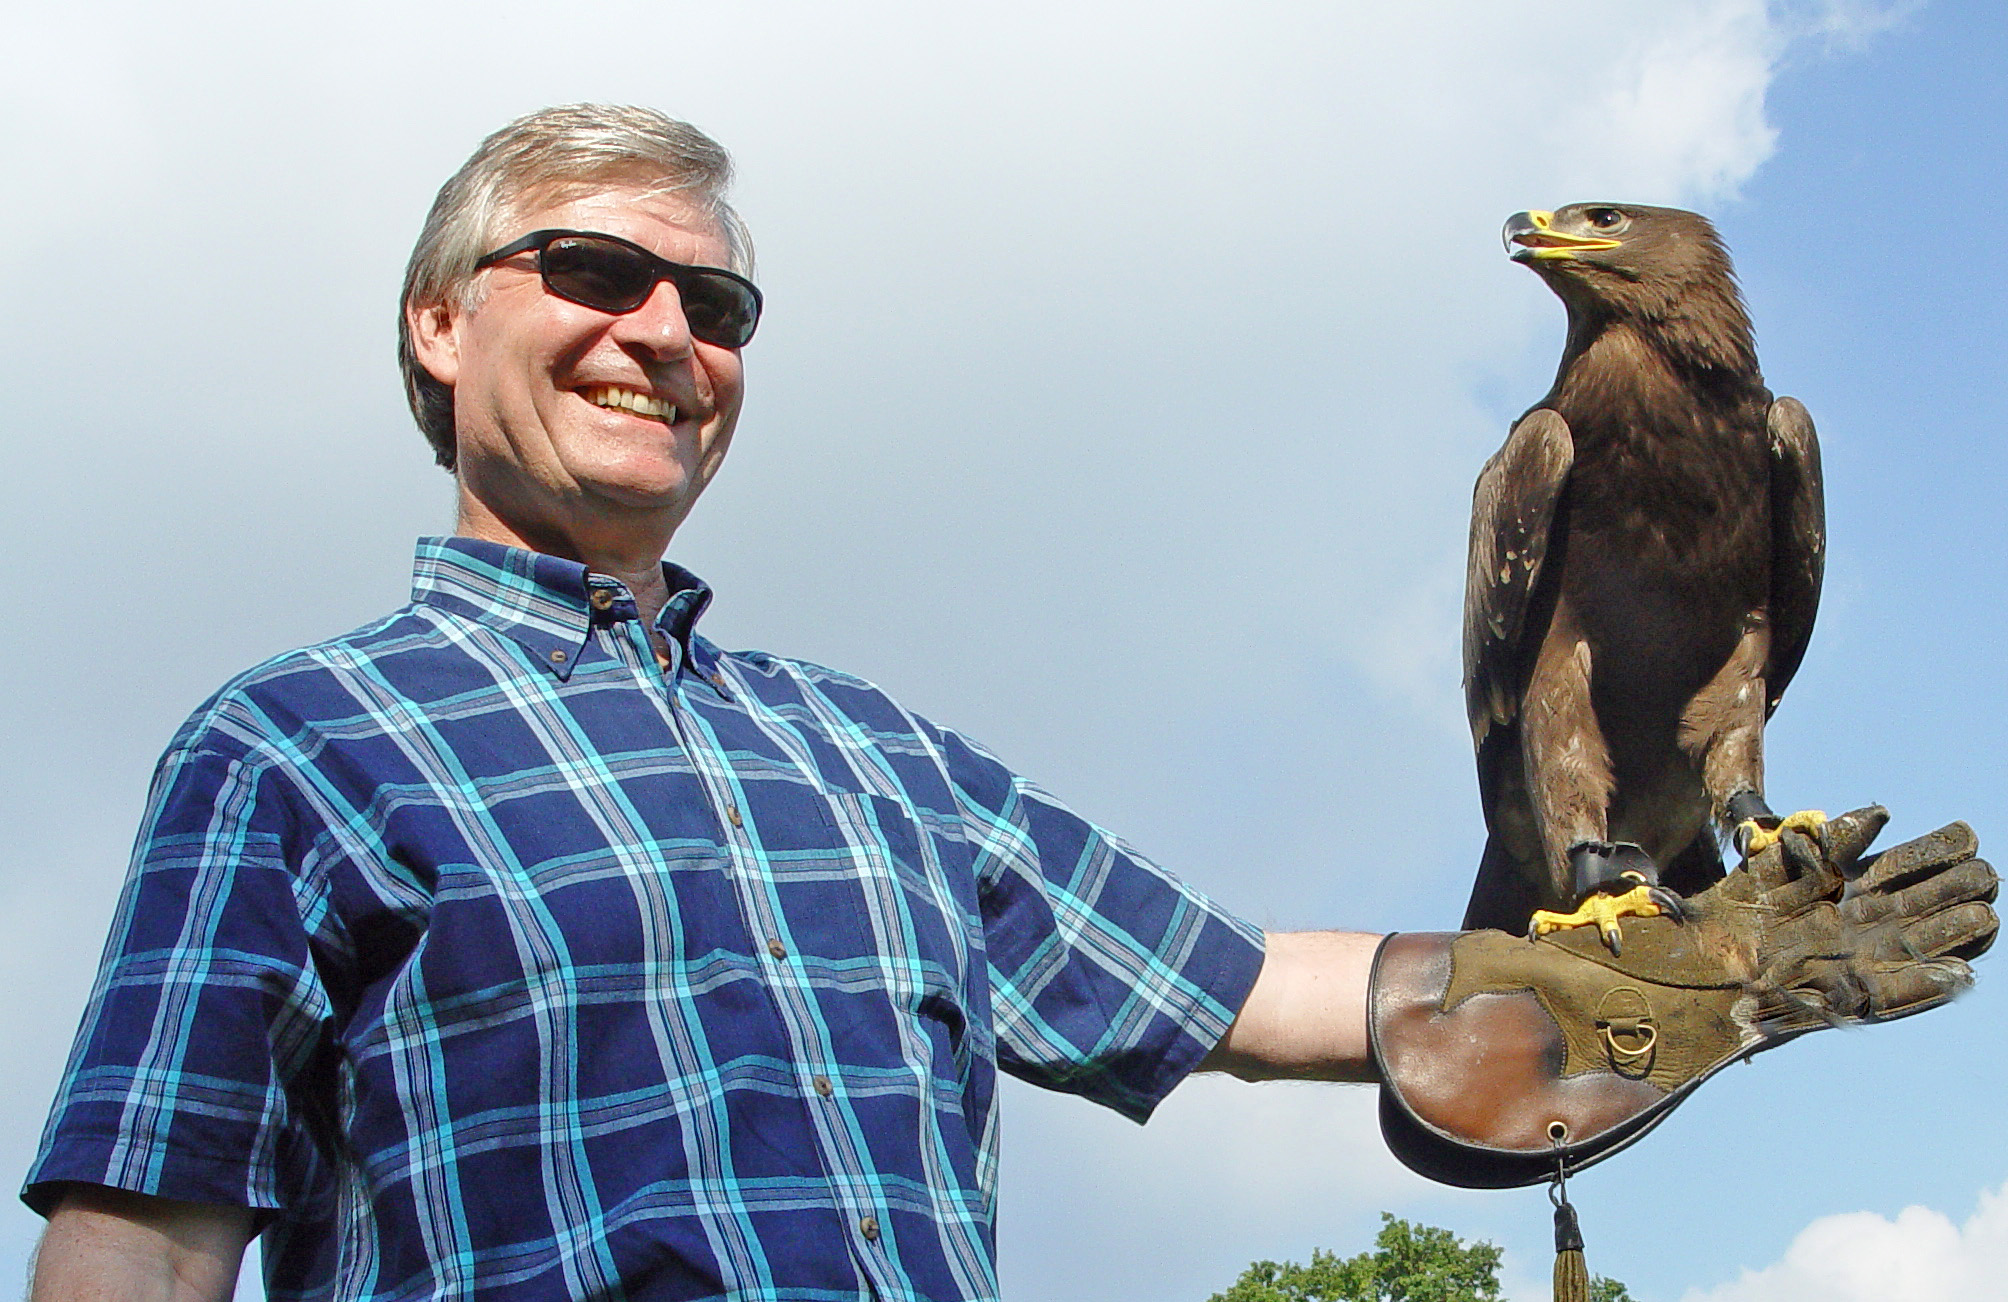 Smiling man holding eagle